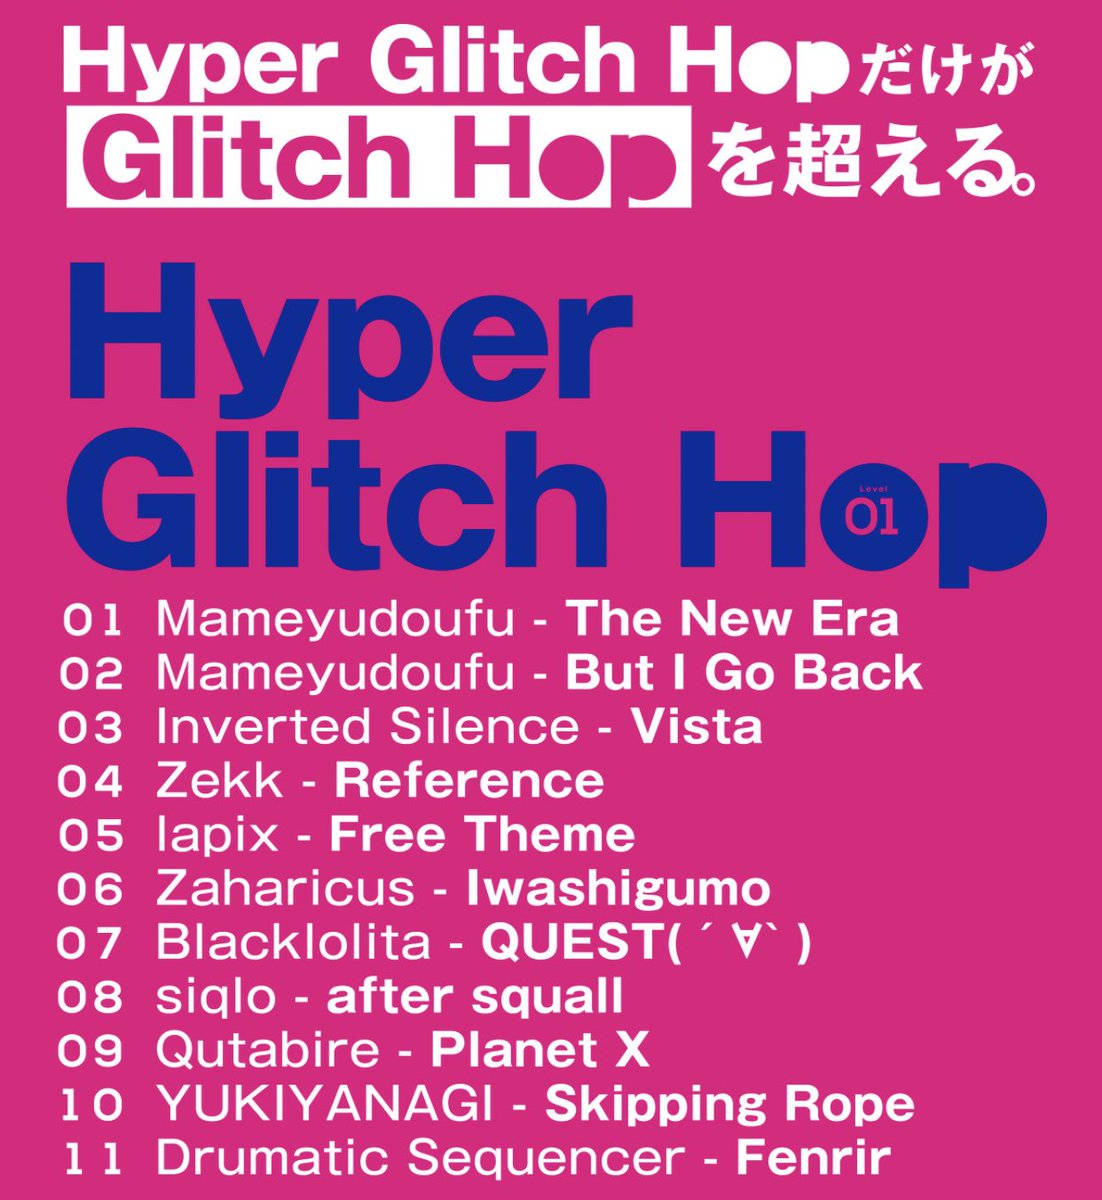 Megarex 新譜情報公開 Glitch Hopを超えるのは Hyper Glitch Hopだけ Hyper Glitch Hop Level01 完成 異次元の未来が 過去から帰ってきた 究極の音質をまとった 未来形グリッチポップを体感せよ 新たな時代の